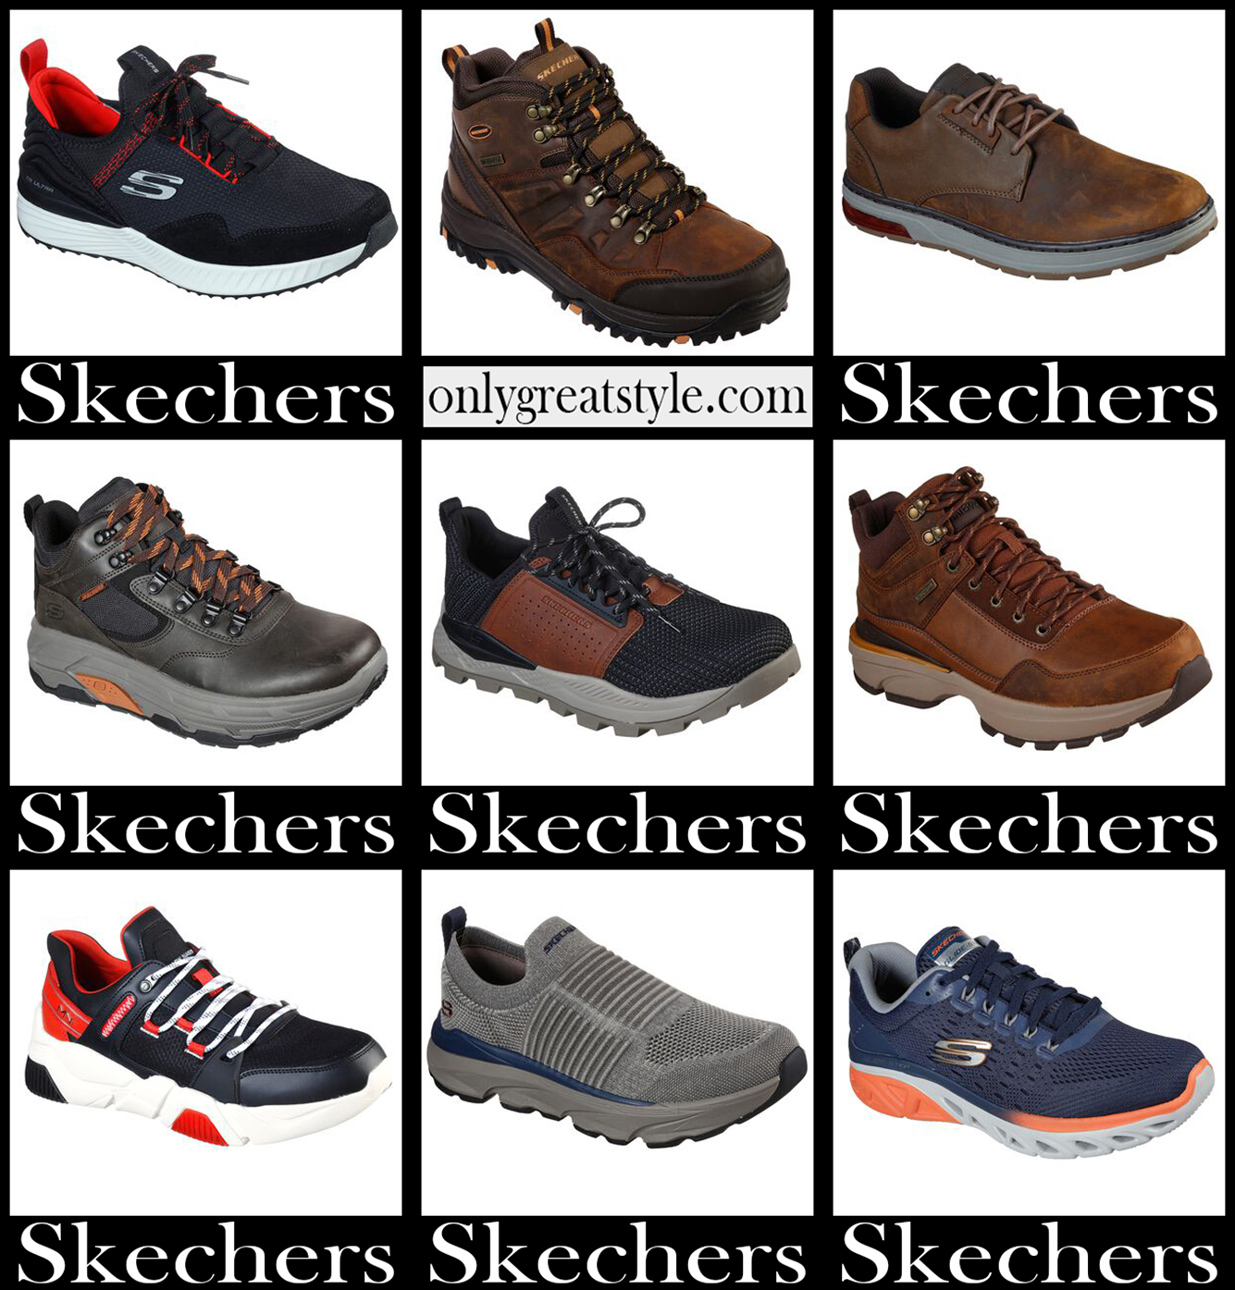 skechers mens winter shoes